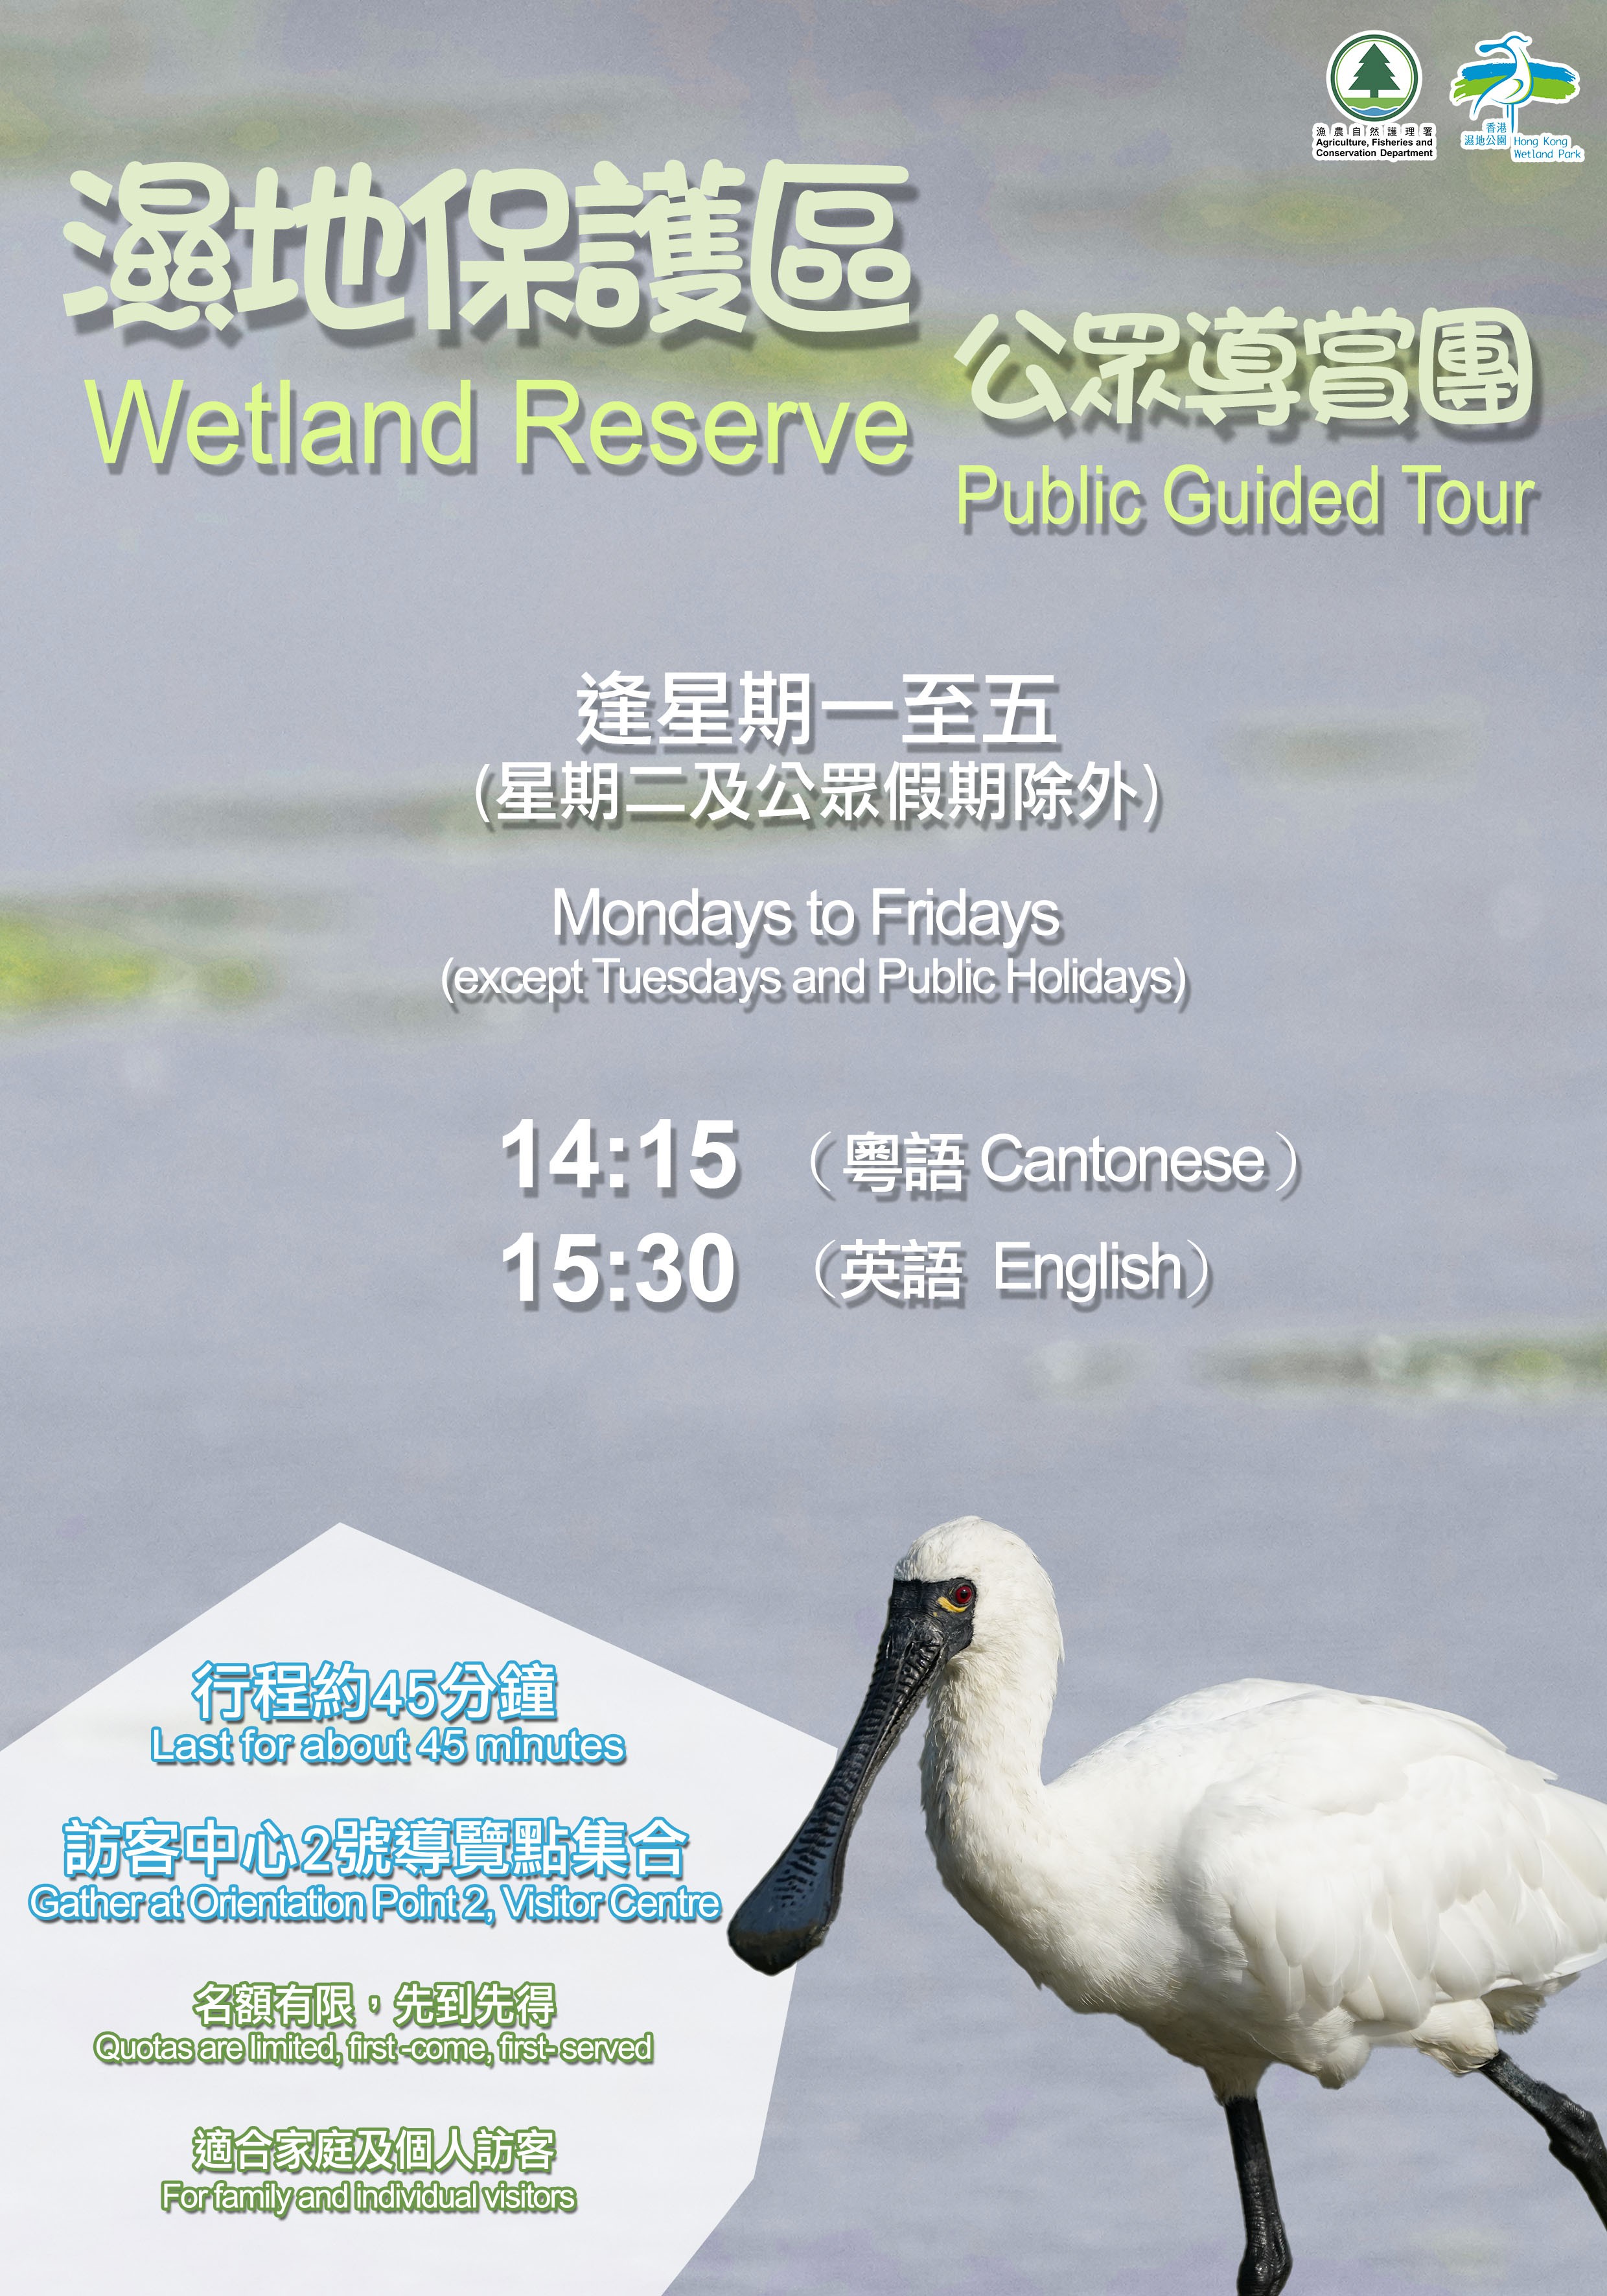 “Wetland Reserve” Public Guided Tour